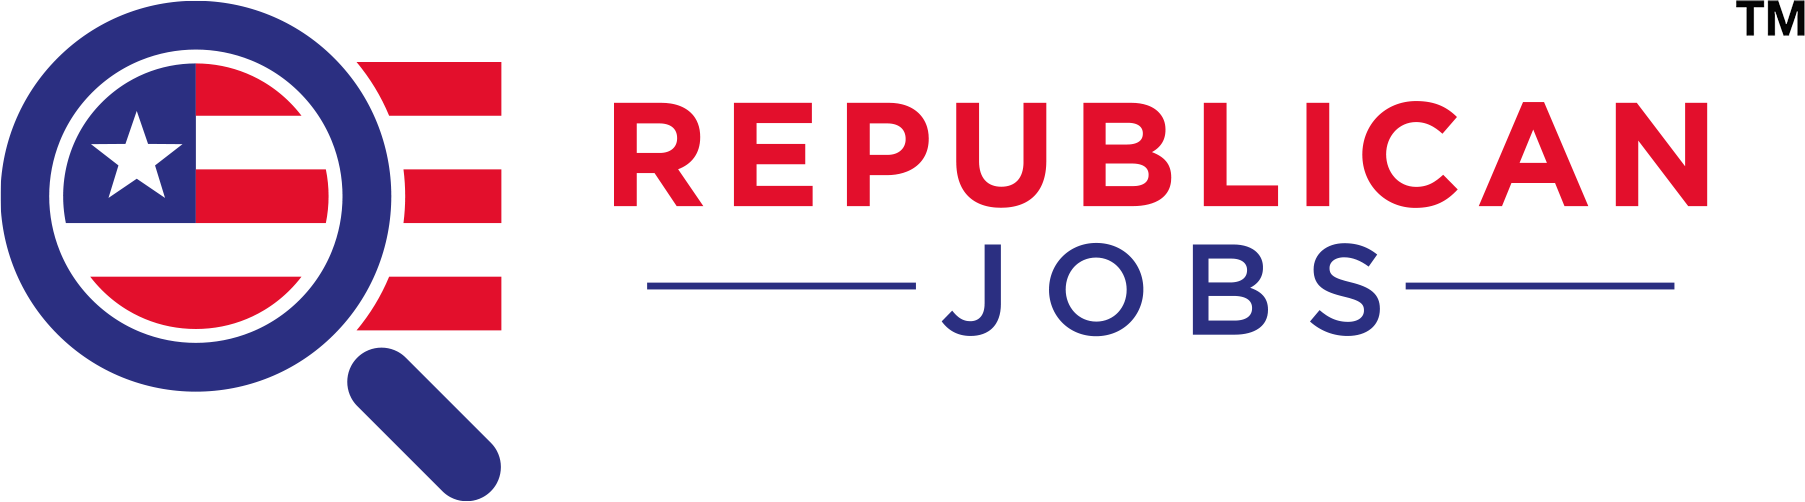 Republican jobs in Murrieta California jobs